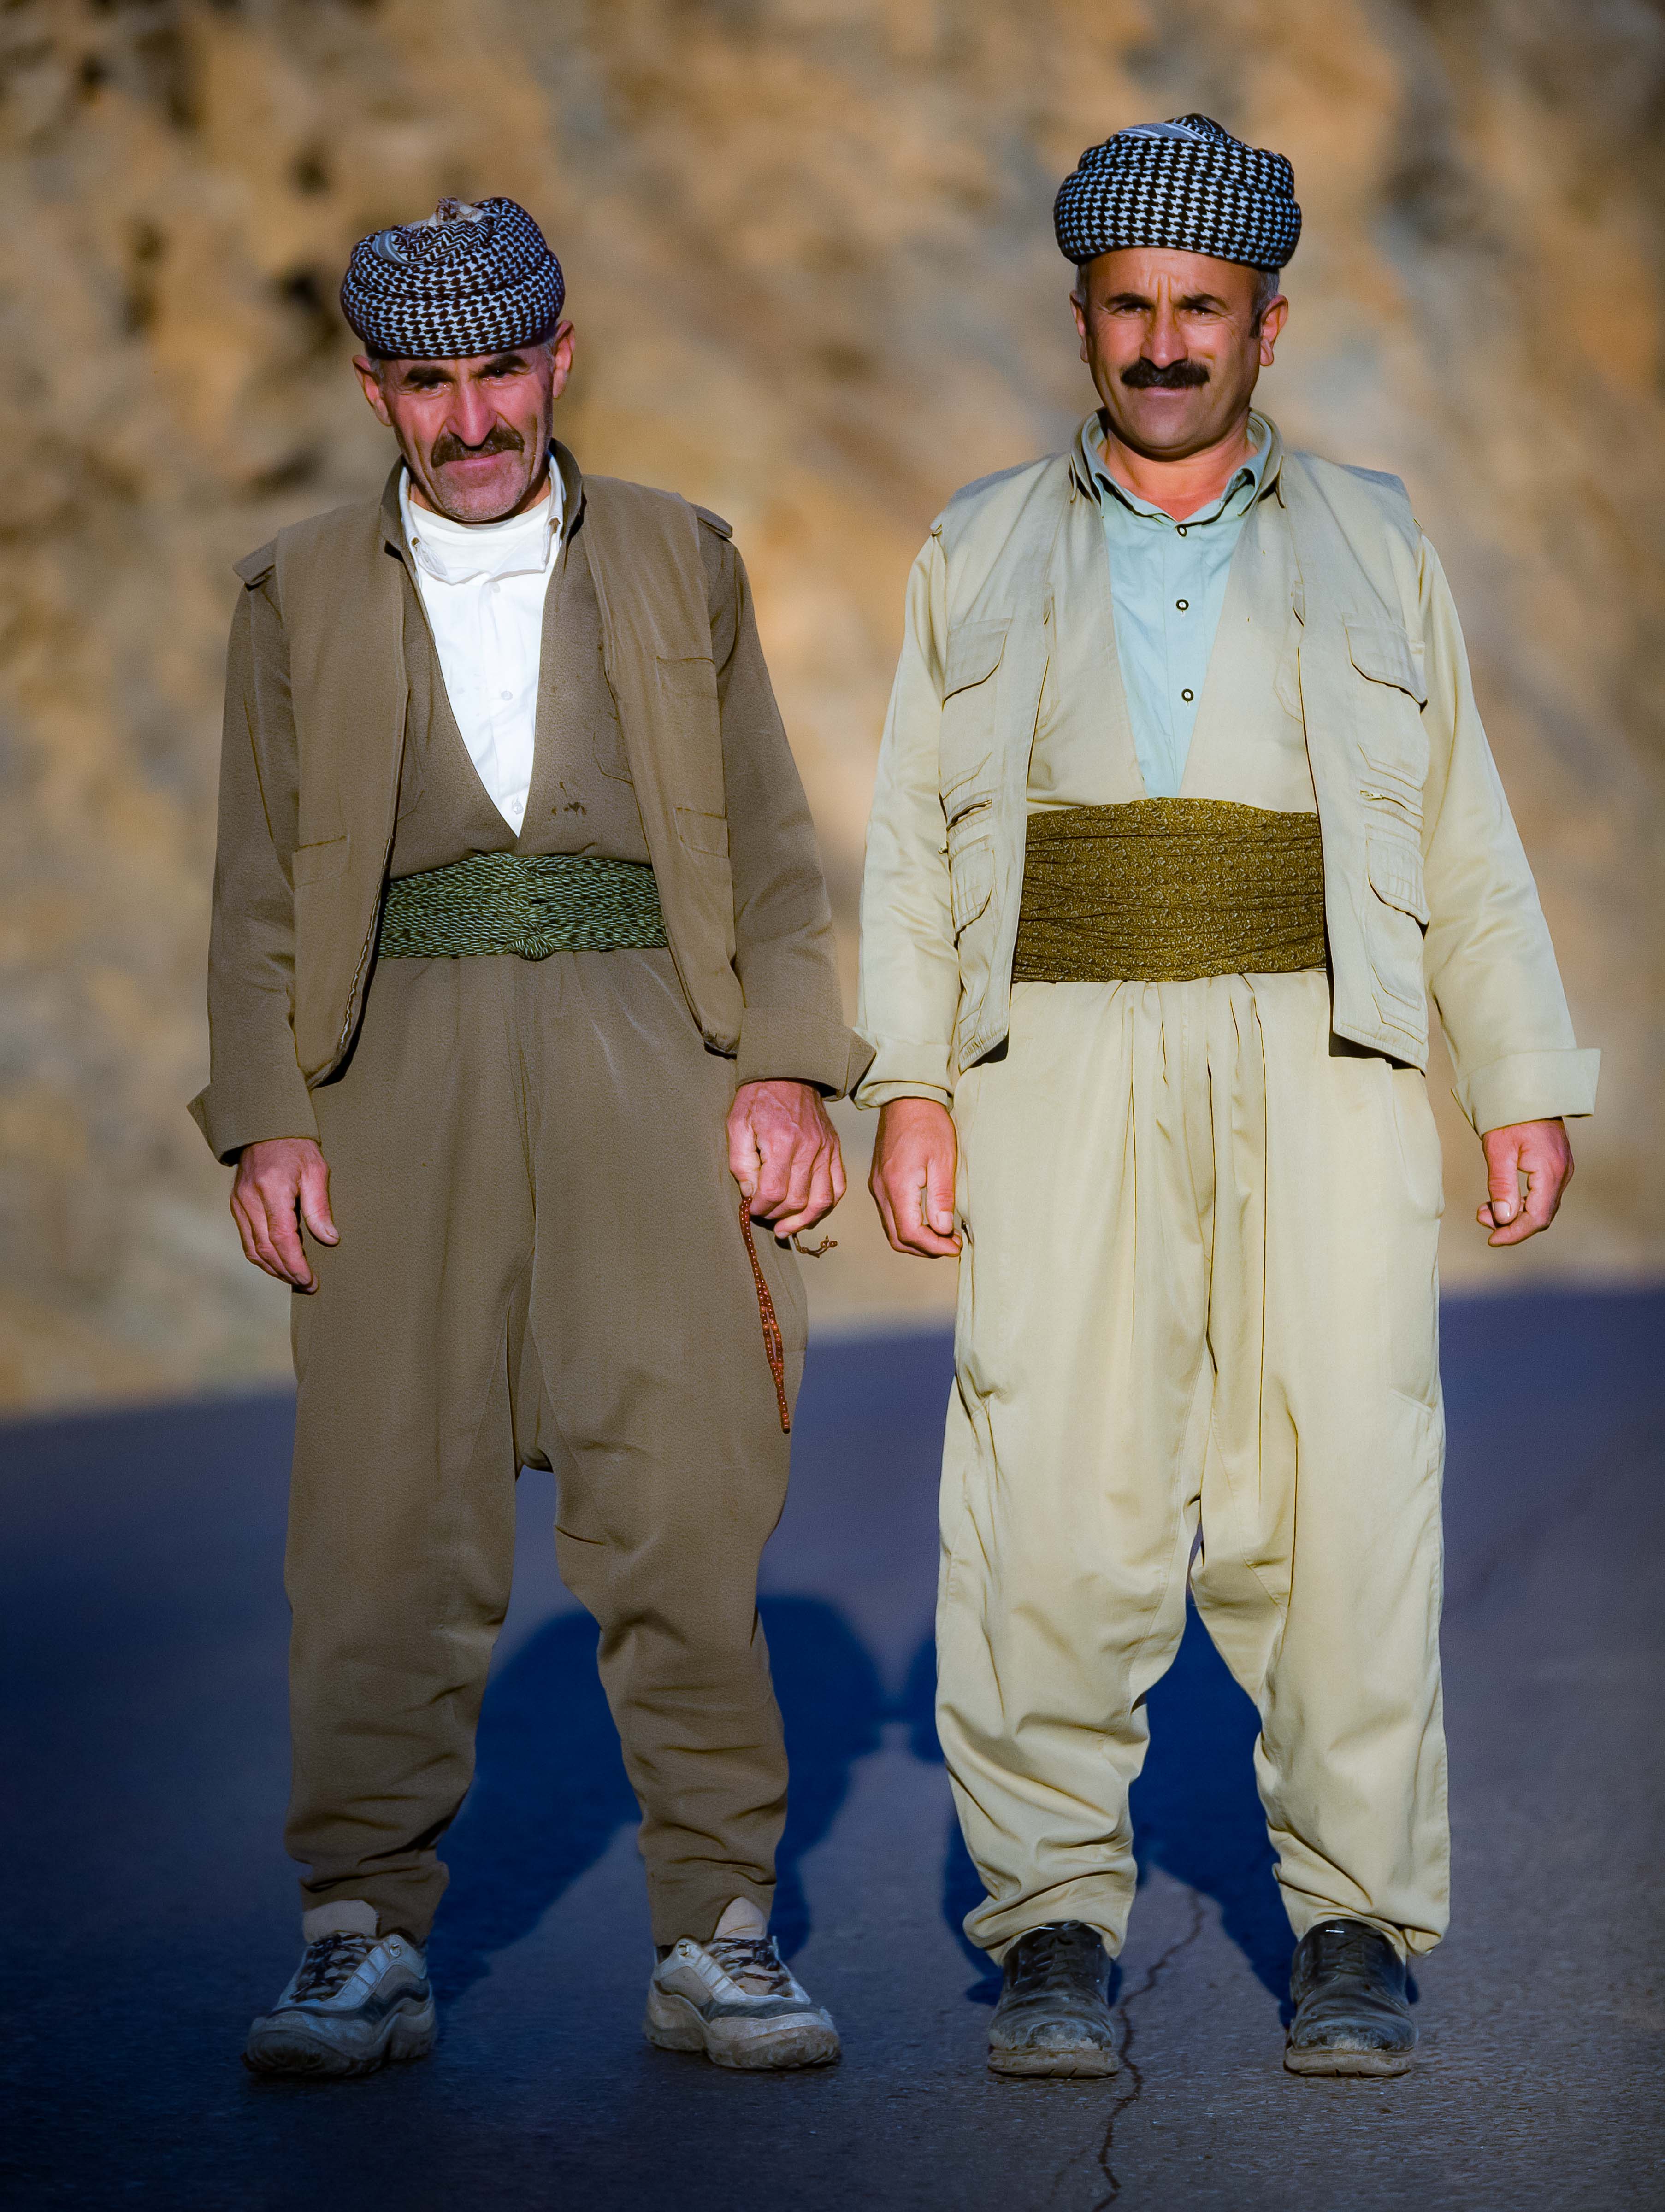 Turkey, Sirnak Prov, Two Kurdish Men, 2009, IMG 1925